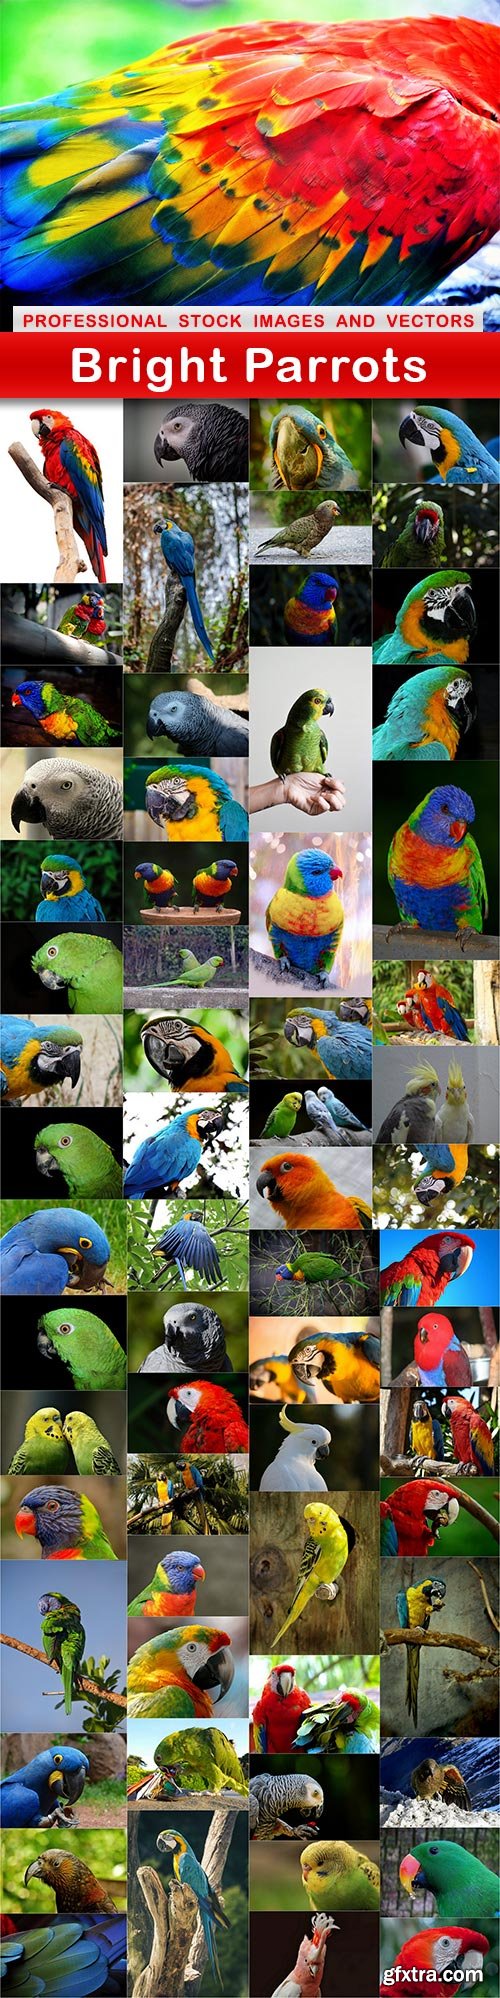 Bright Parrots - 65 UHQ JPEG